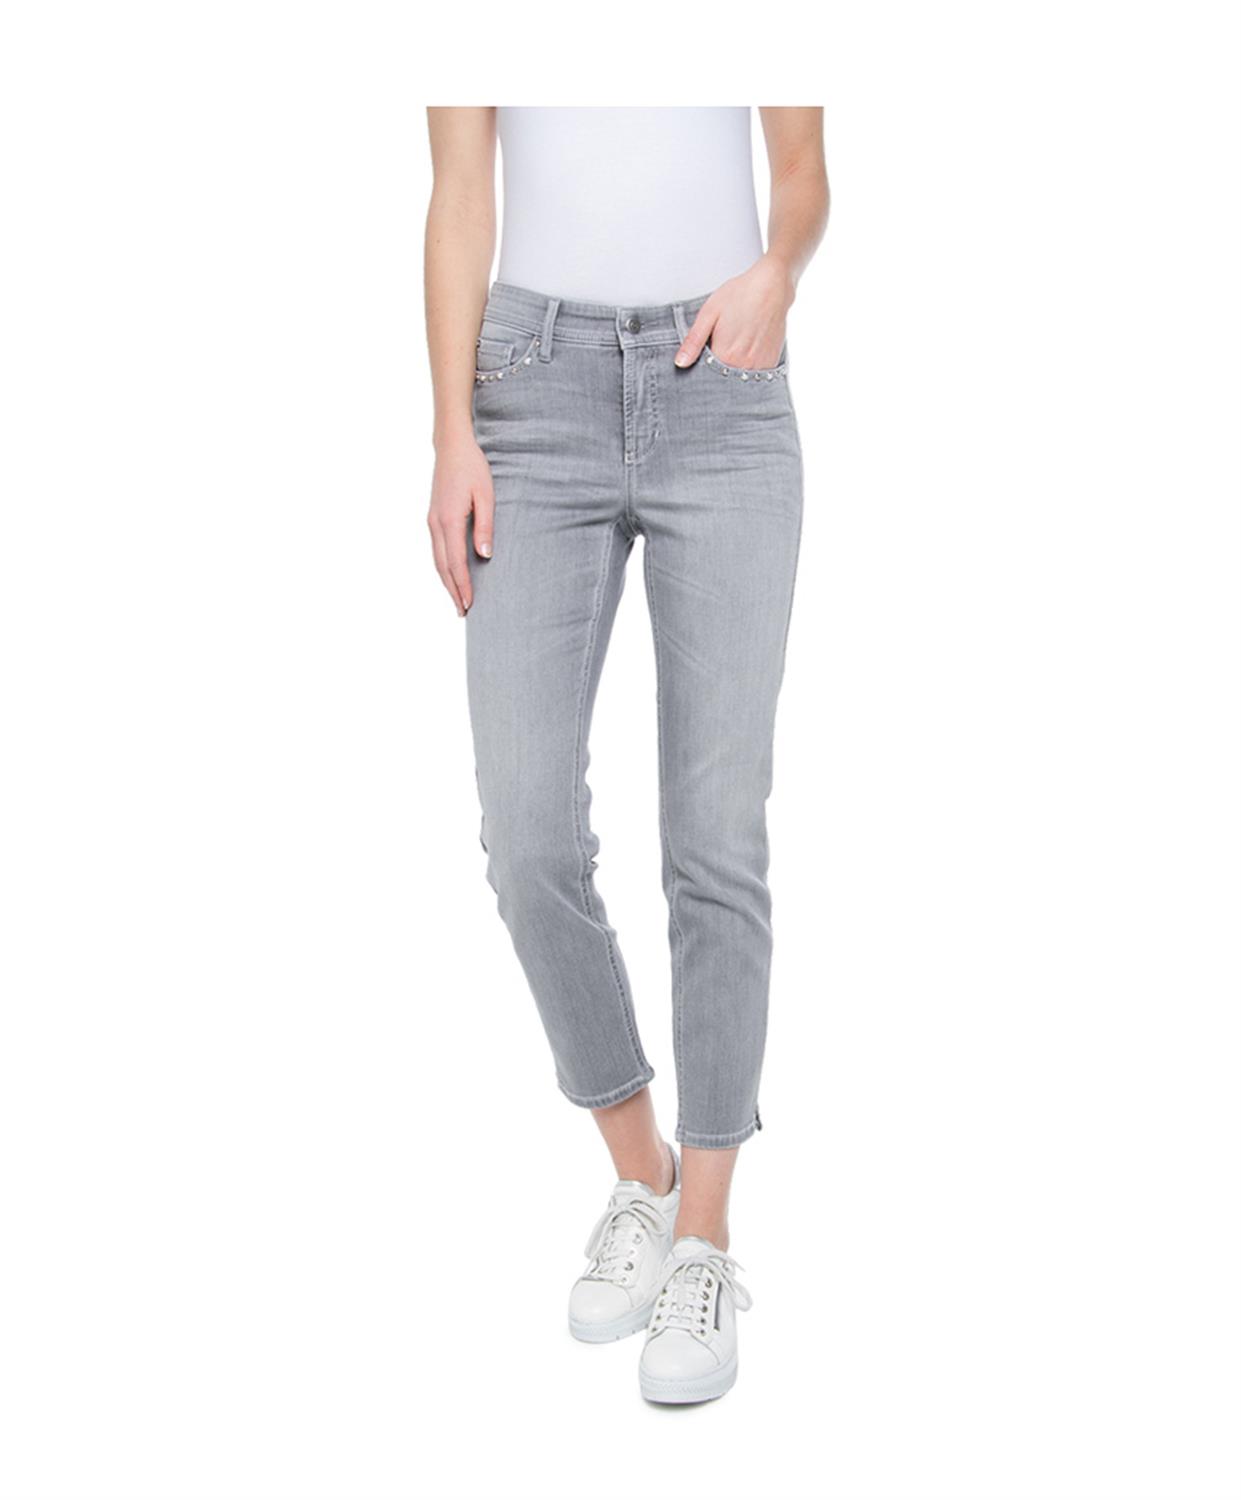 Cambio Piper Short Jeans cambio-jeans-grijs-9221-piper-short-pal ... UYEVLID